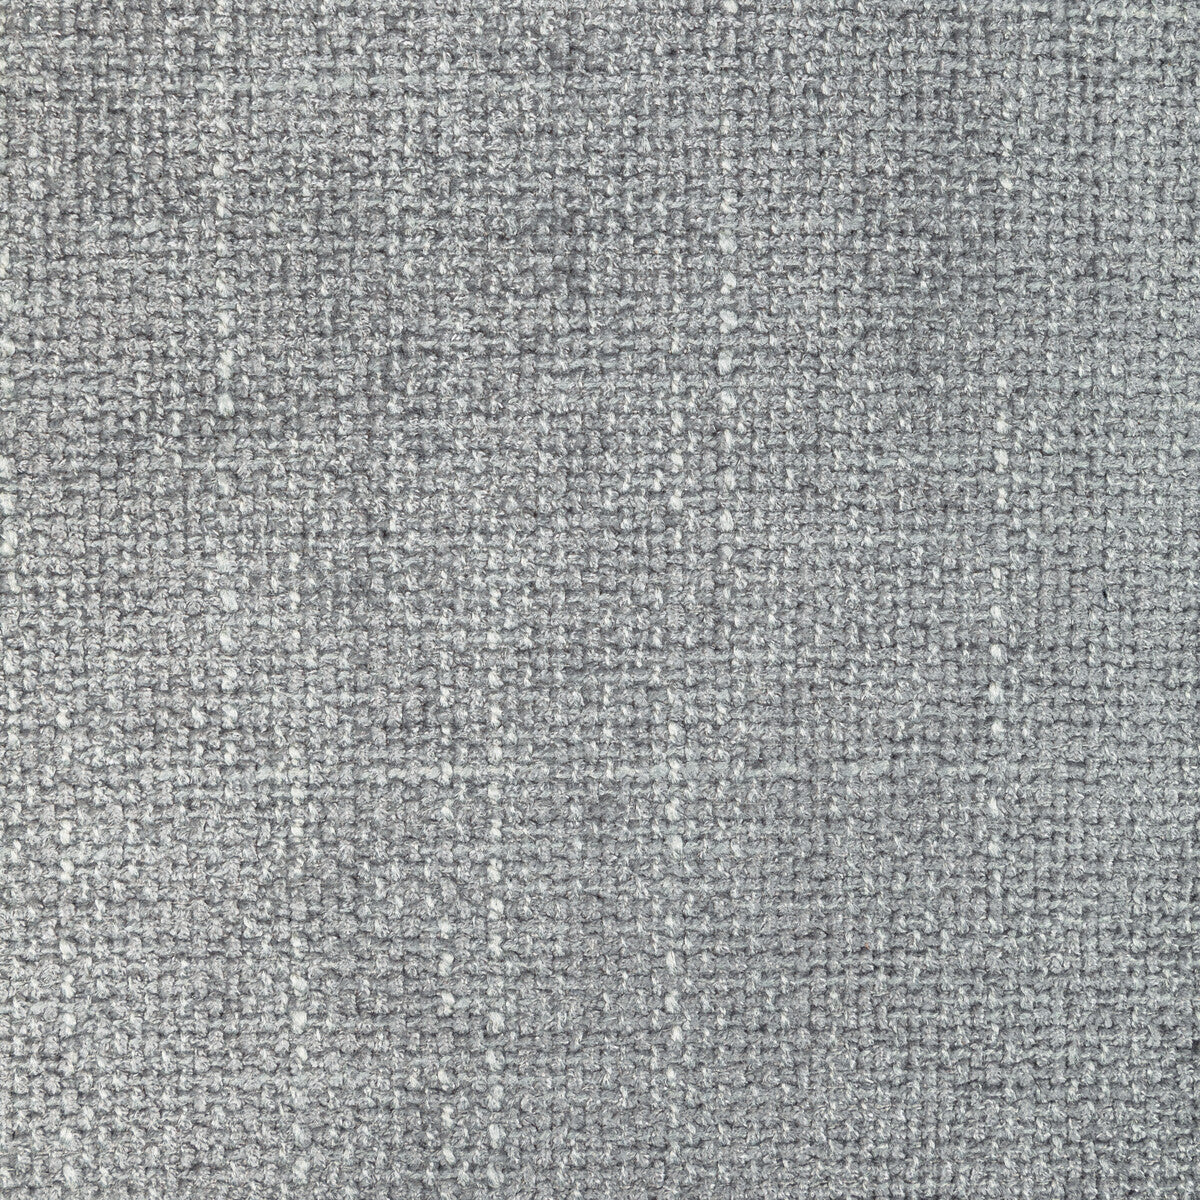 Kravet Smart fabric in 36579-11 color - pattern 36579.11.0 - by Kravet Smart in the Performance Kravetarmor collection